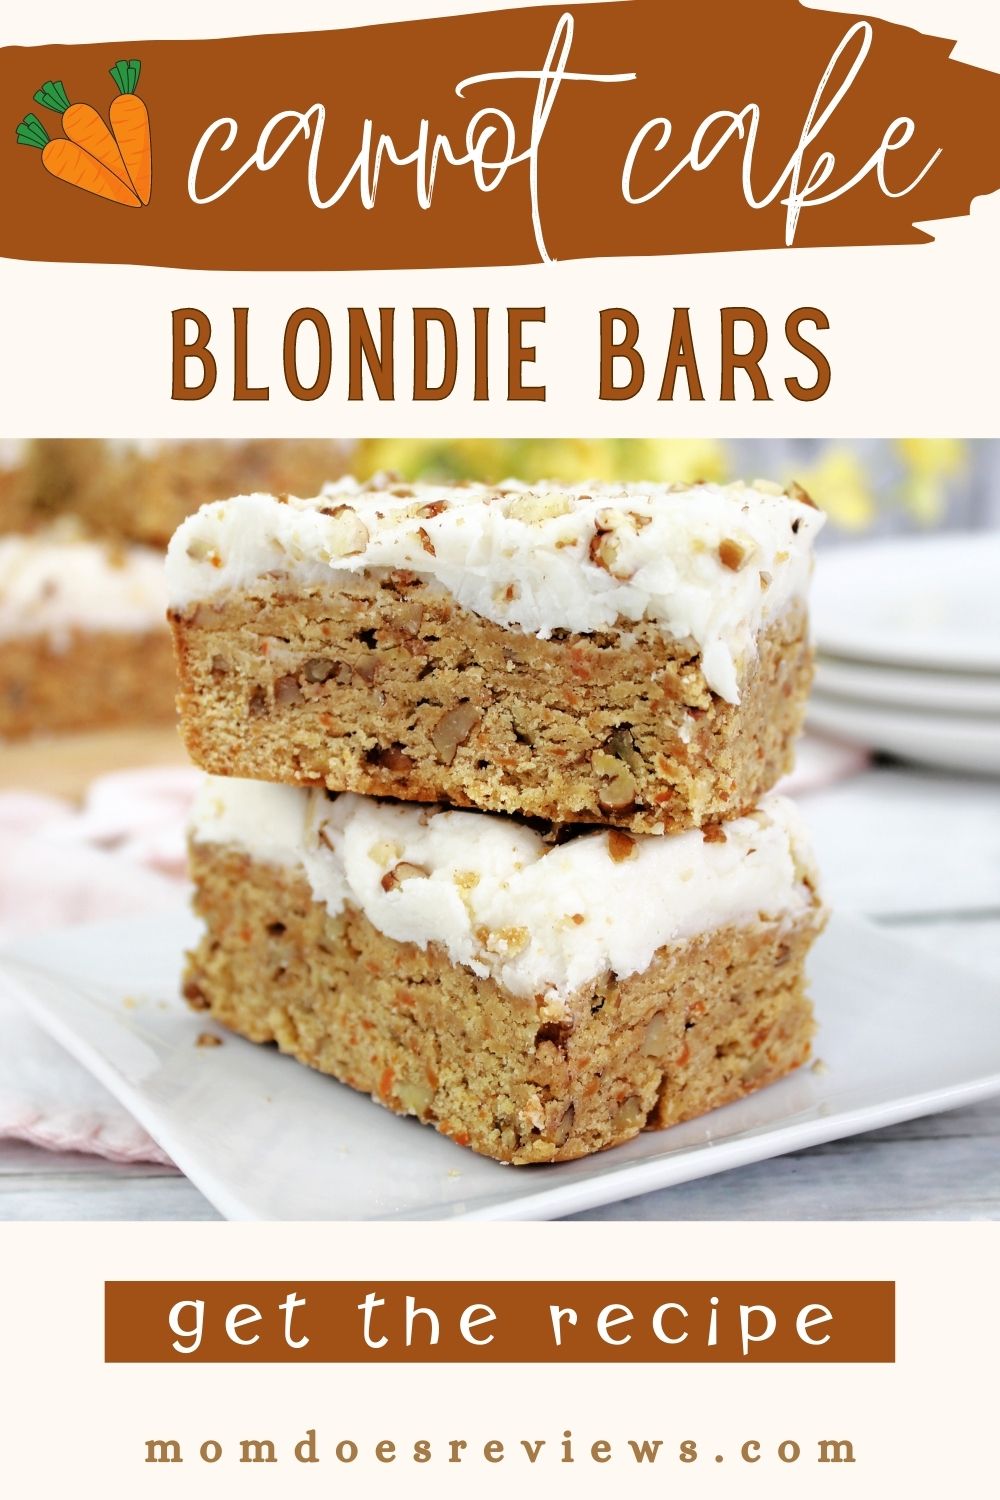 Carrot Cake Blondie Bars